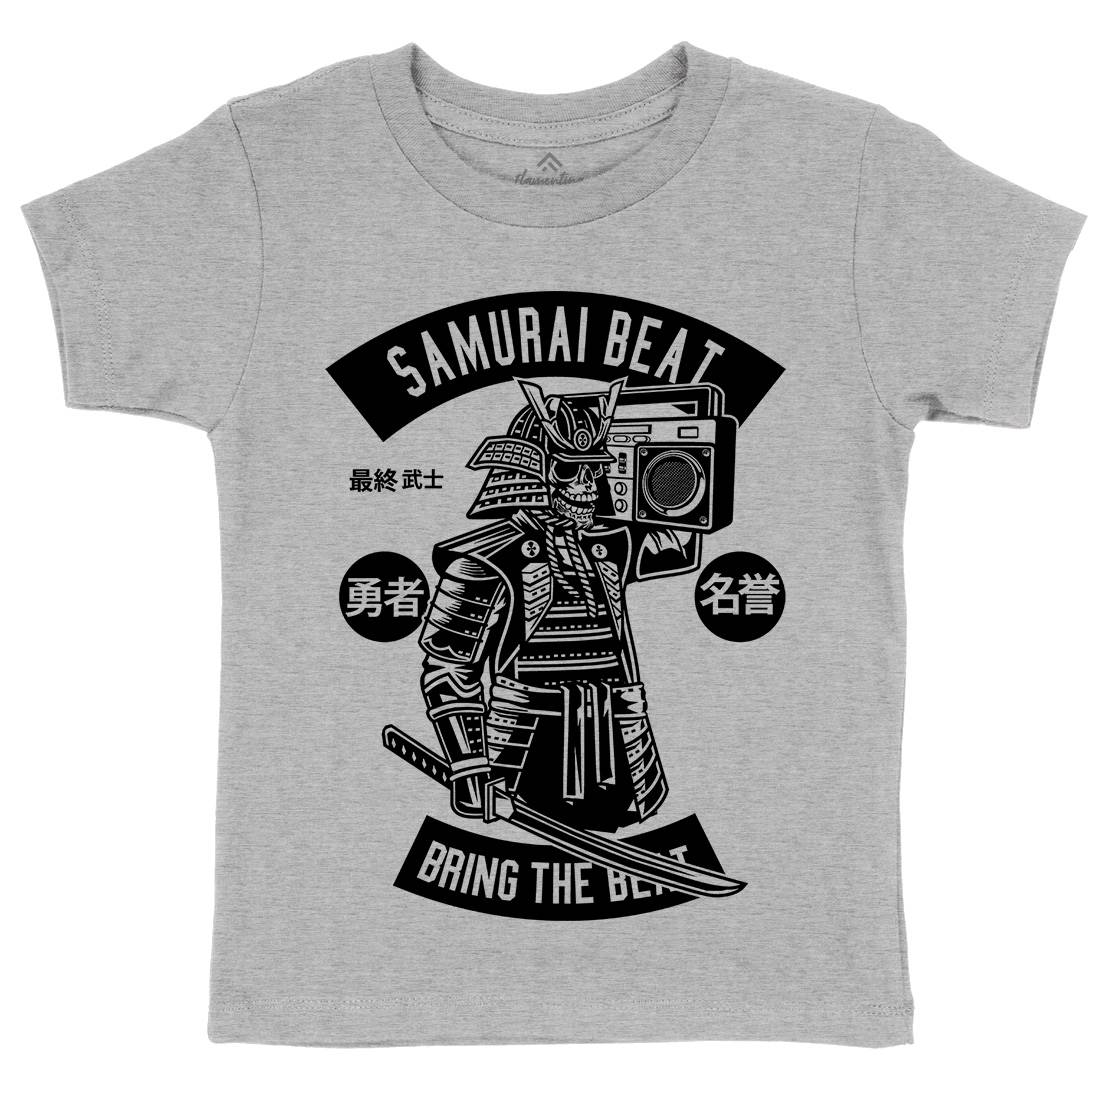 Samurai Beat Kids Organic Crew Neck T-Shirt Asian B615